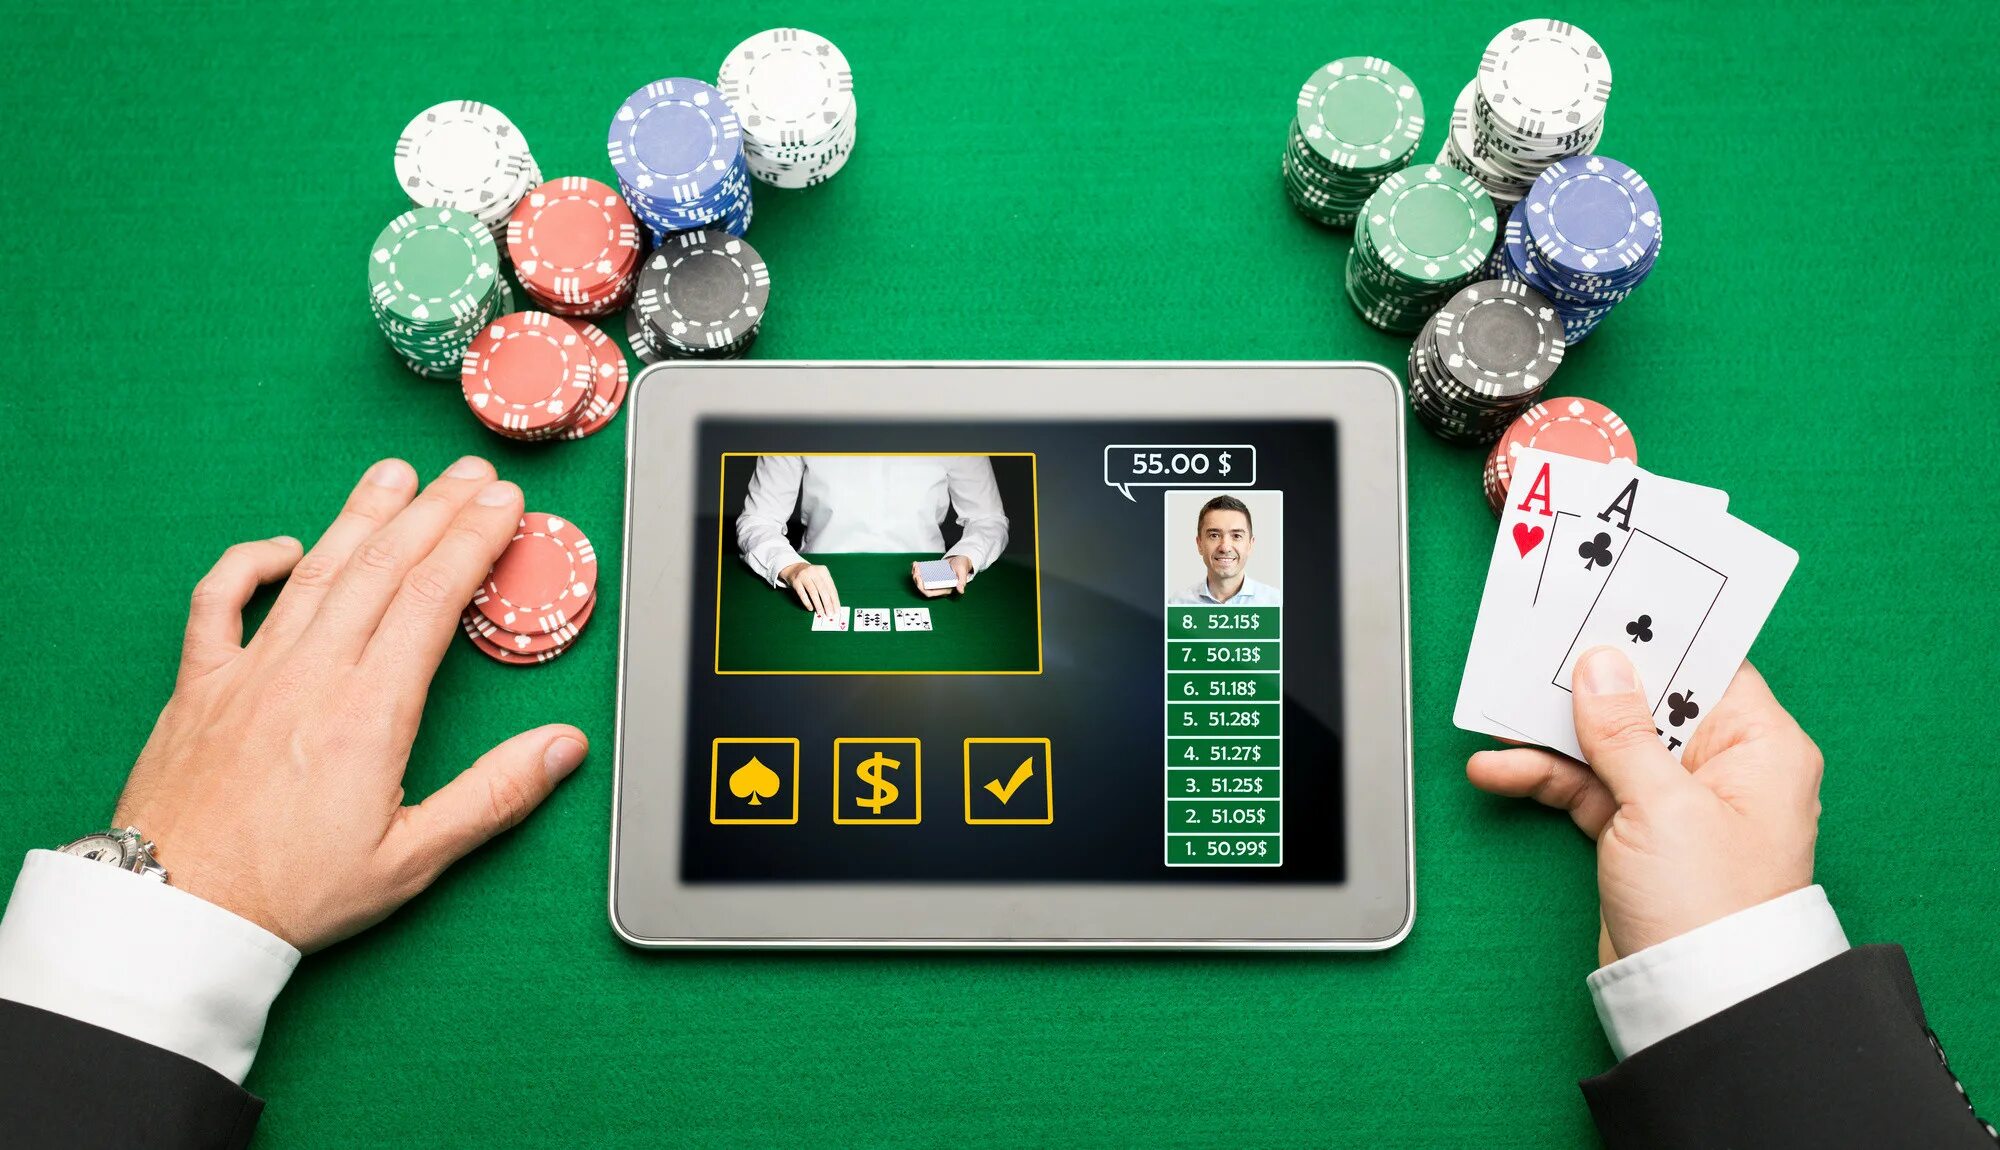 Https money x11 casino. Покер. Азартные игры Покер казино. Интернет Покер. Интернет казино Покер.